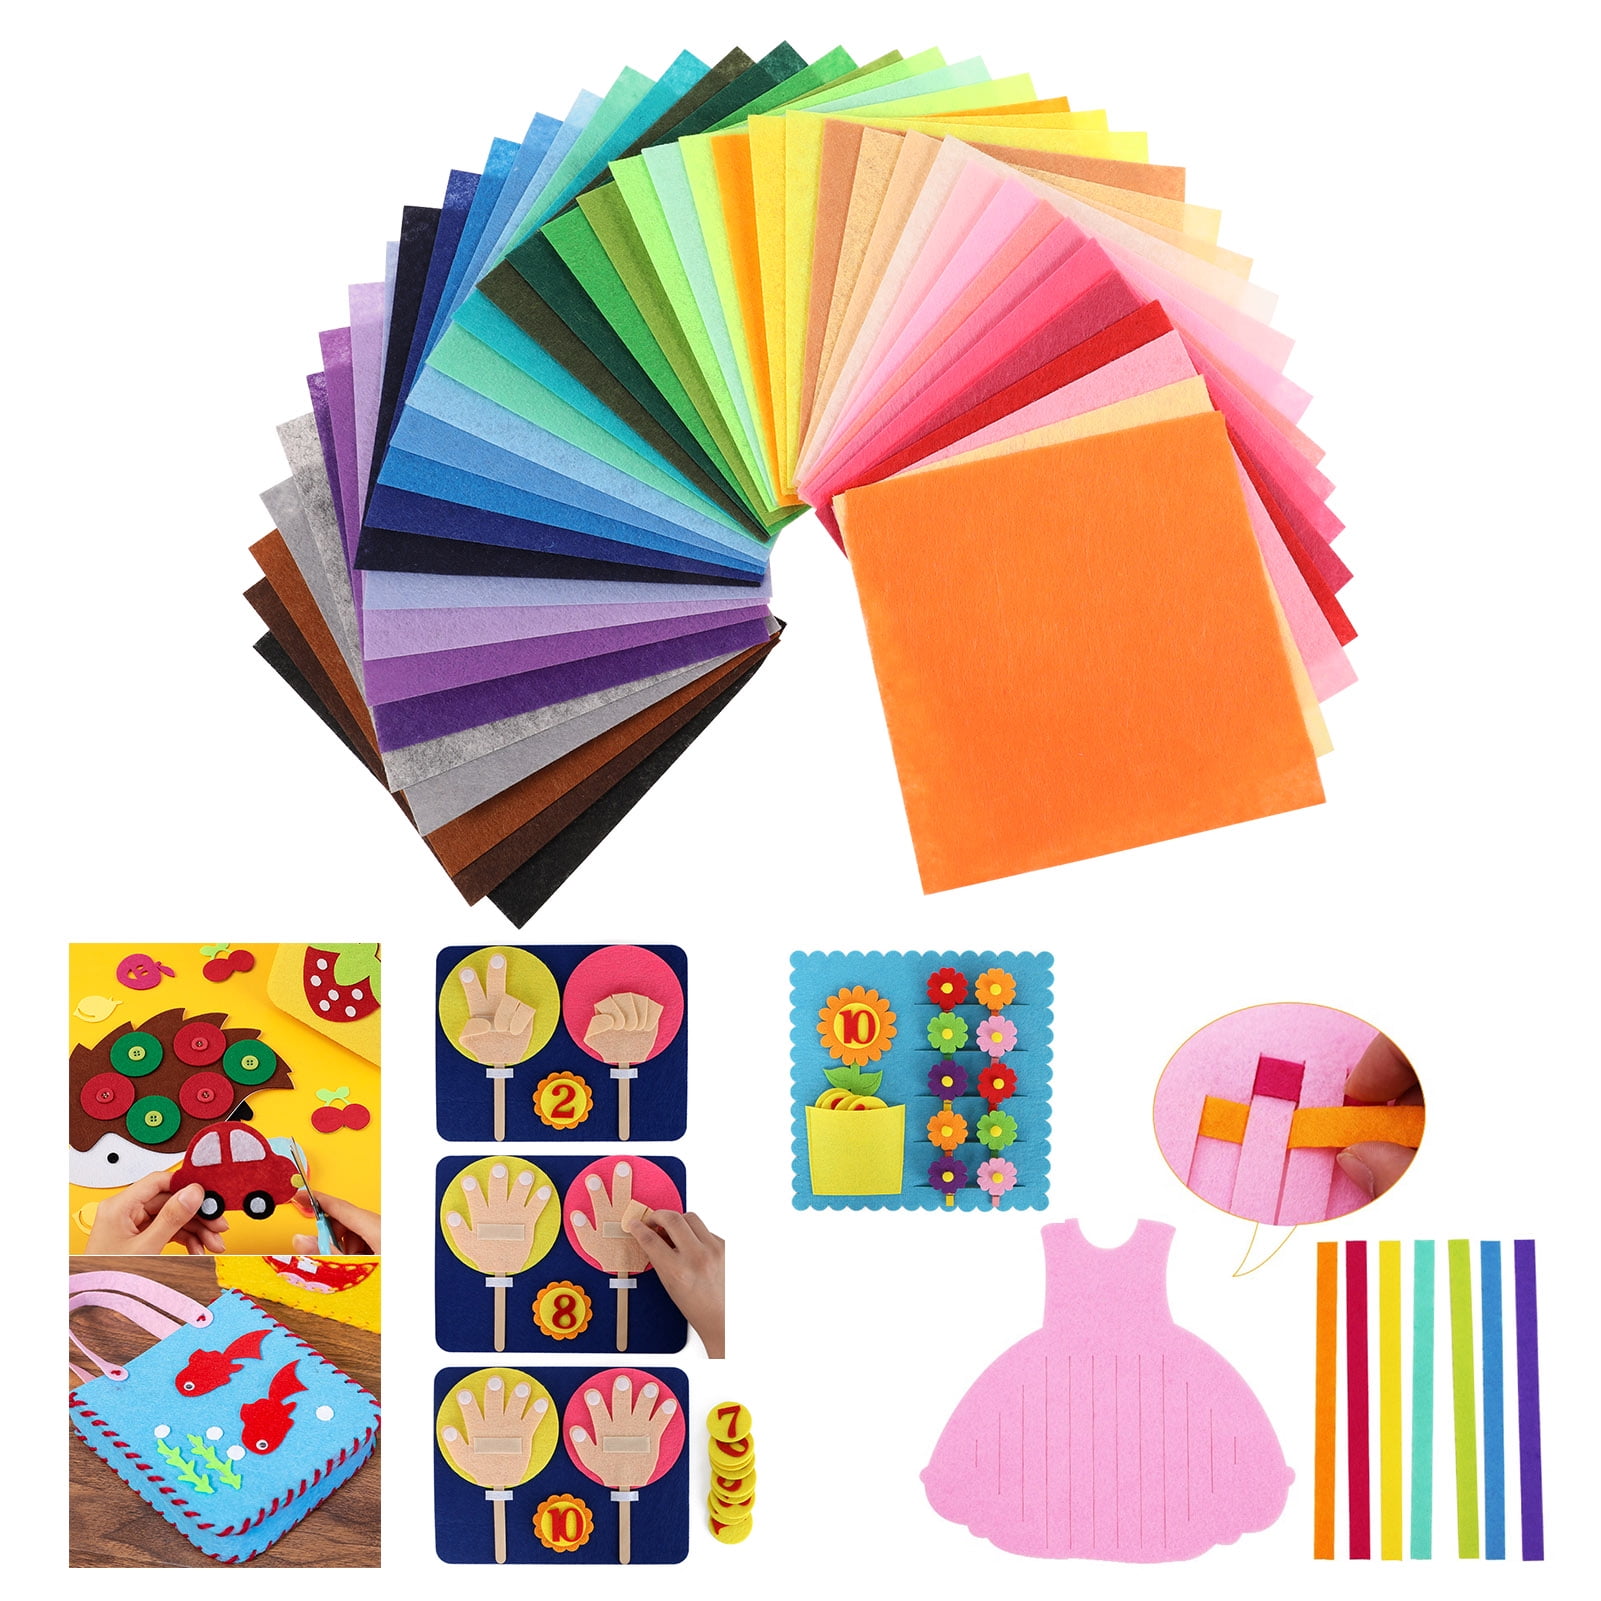 Arham 30 * 30 cm Size Felt Sheet for Craft, Decorations, School Projects,  DIY Etc. Color:- Multicolor, Set of 10 - 30 * 30 cm Size Felt Sheet for  Craft, Decorations, School